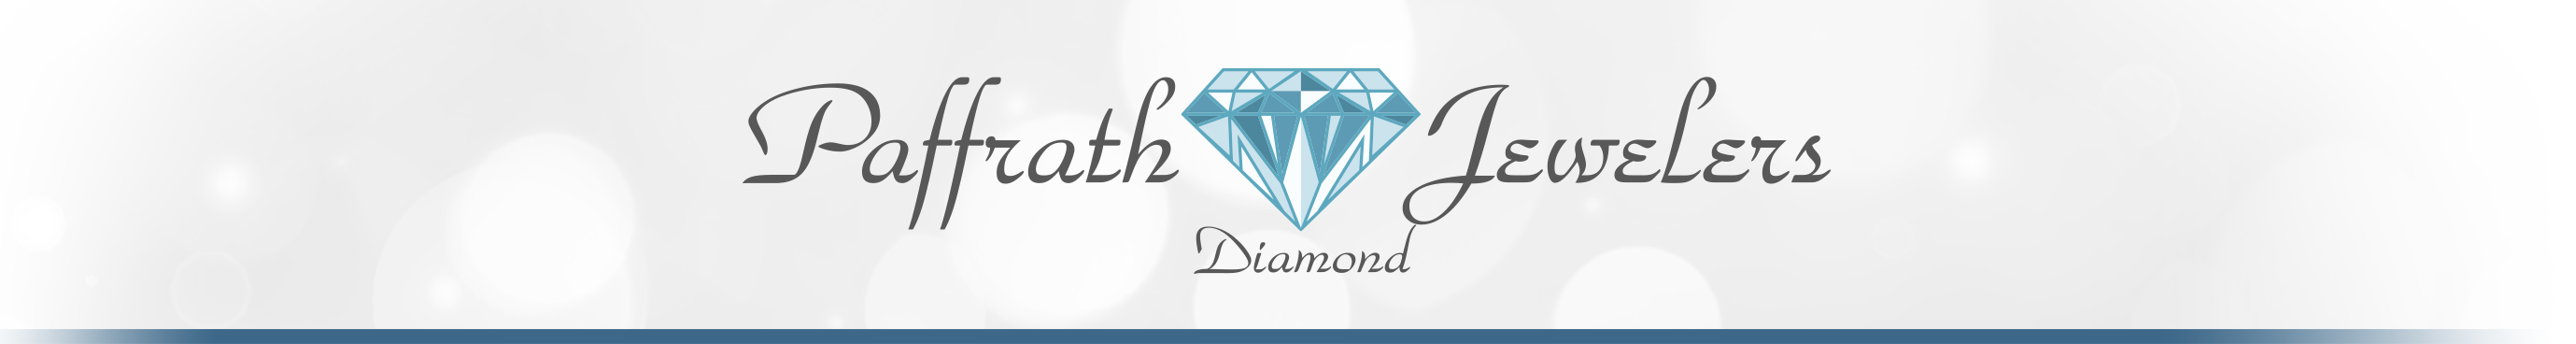 Paffrath Diamond Jewelers Logo